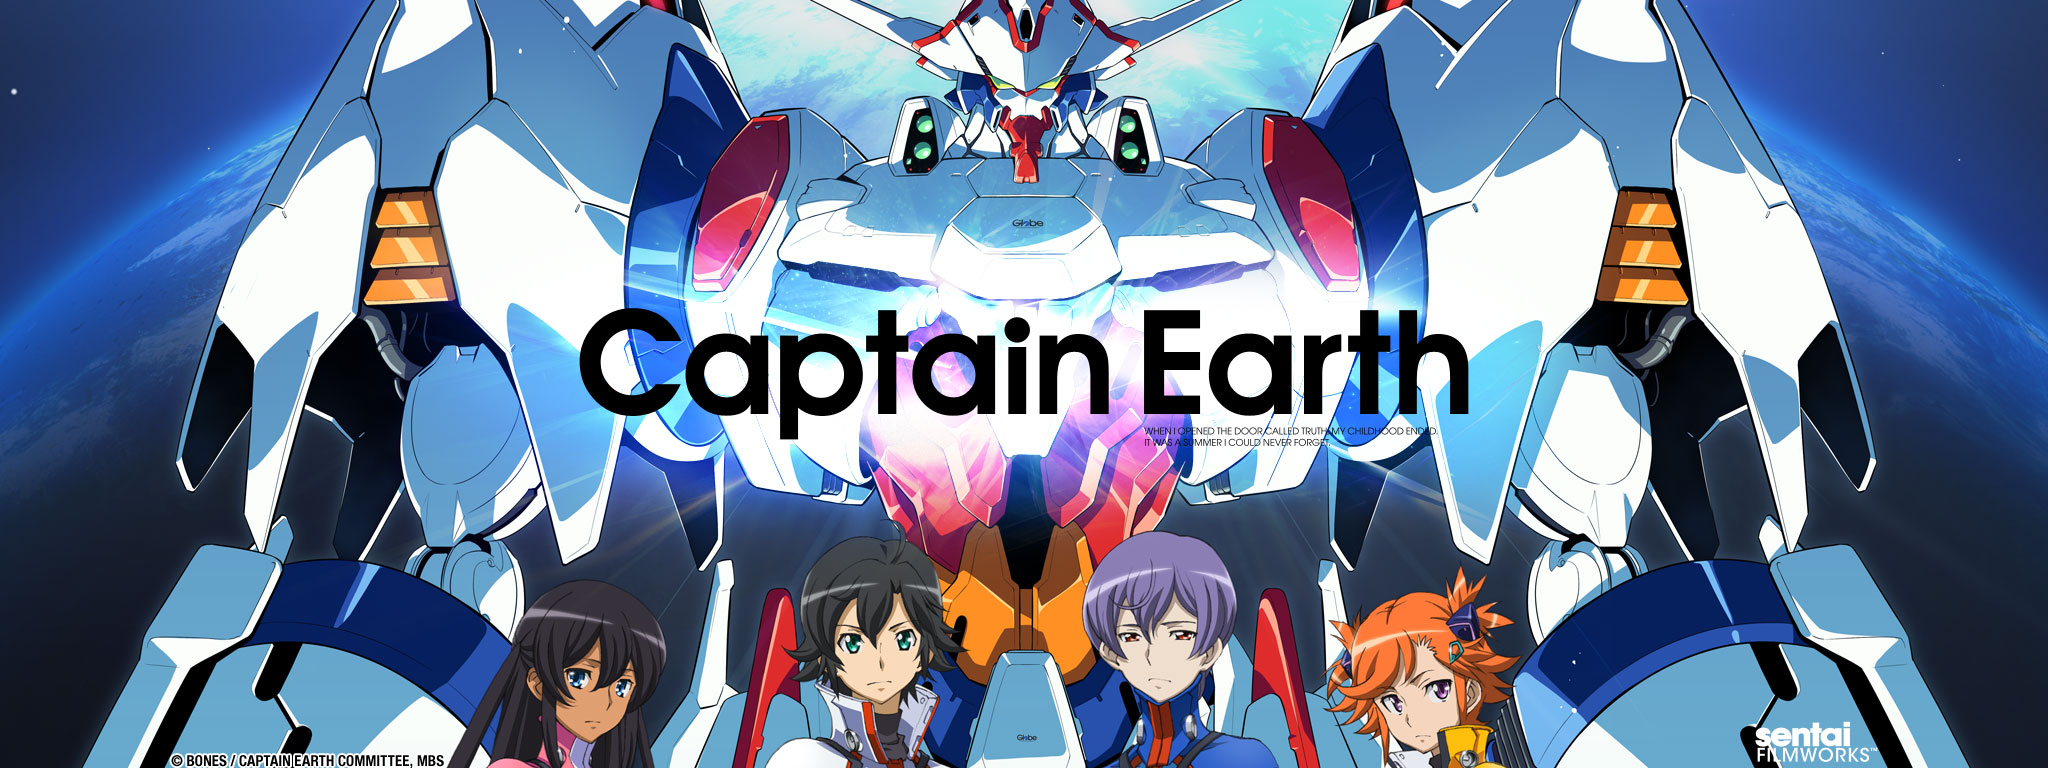 Title Art for Captain Earth